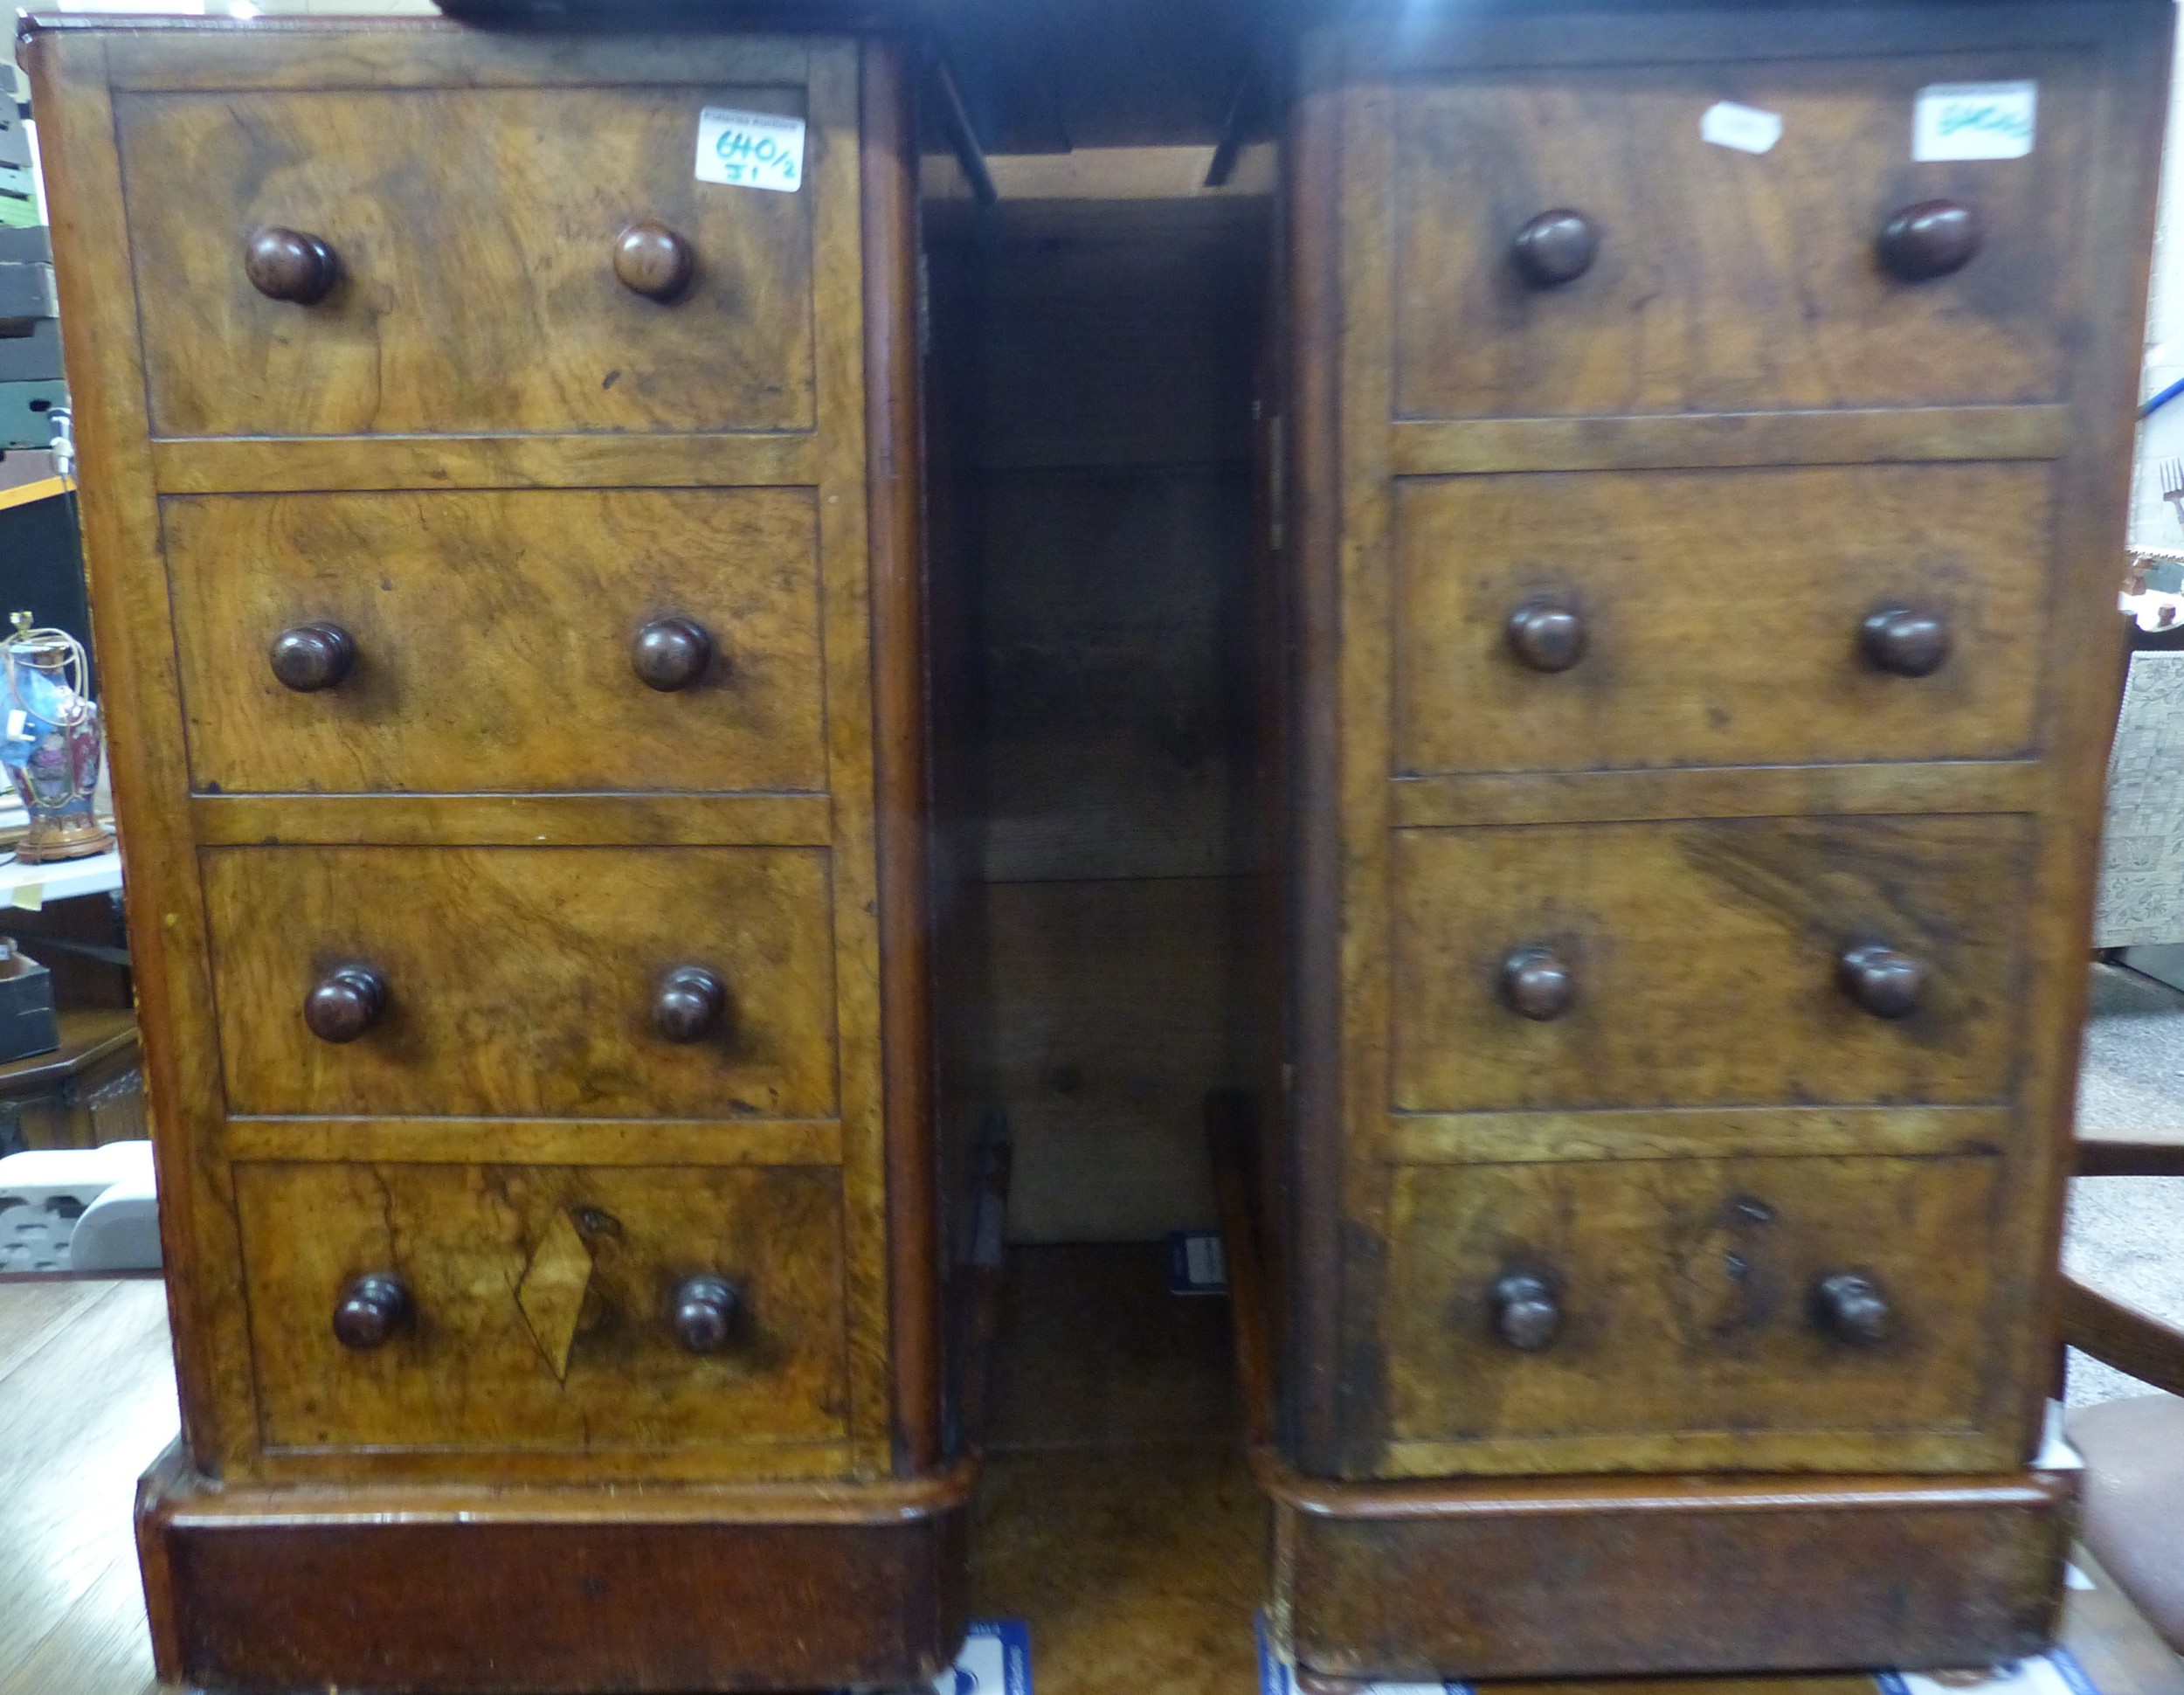 A pair of unusual Walnut Veneer Bedside cabinets (repurposed from a pedestal desk)